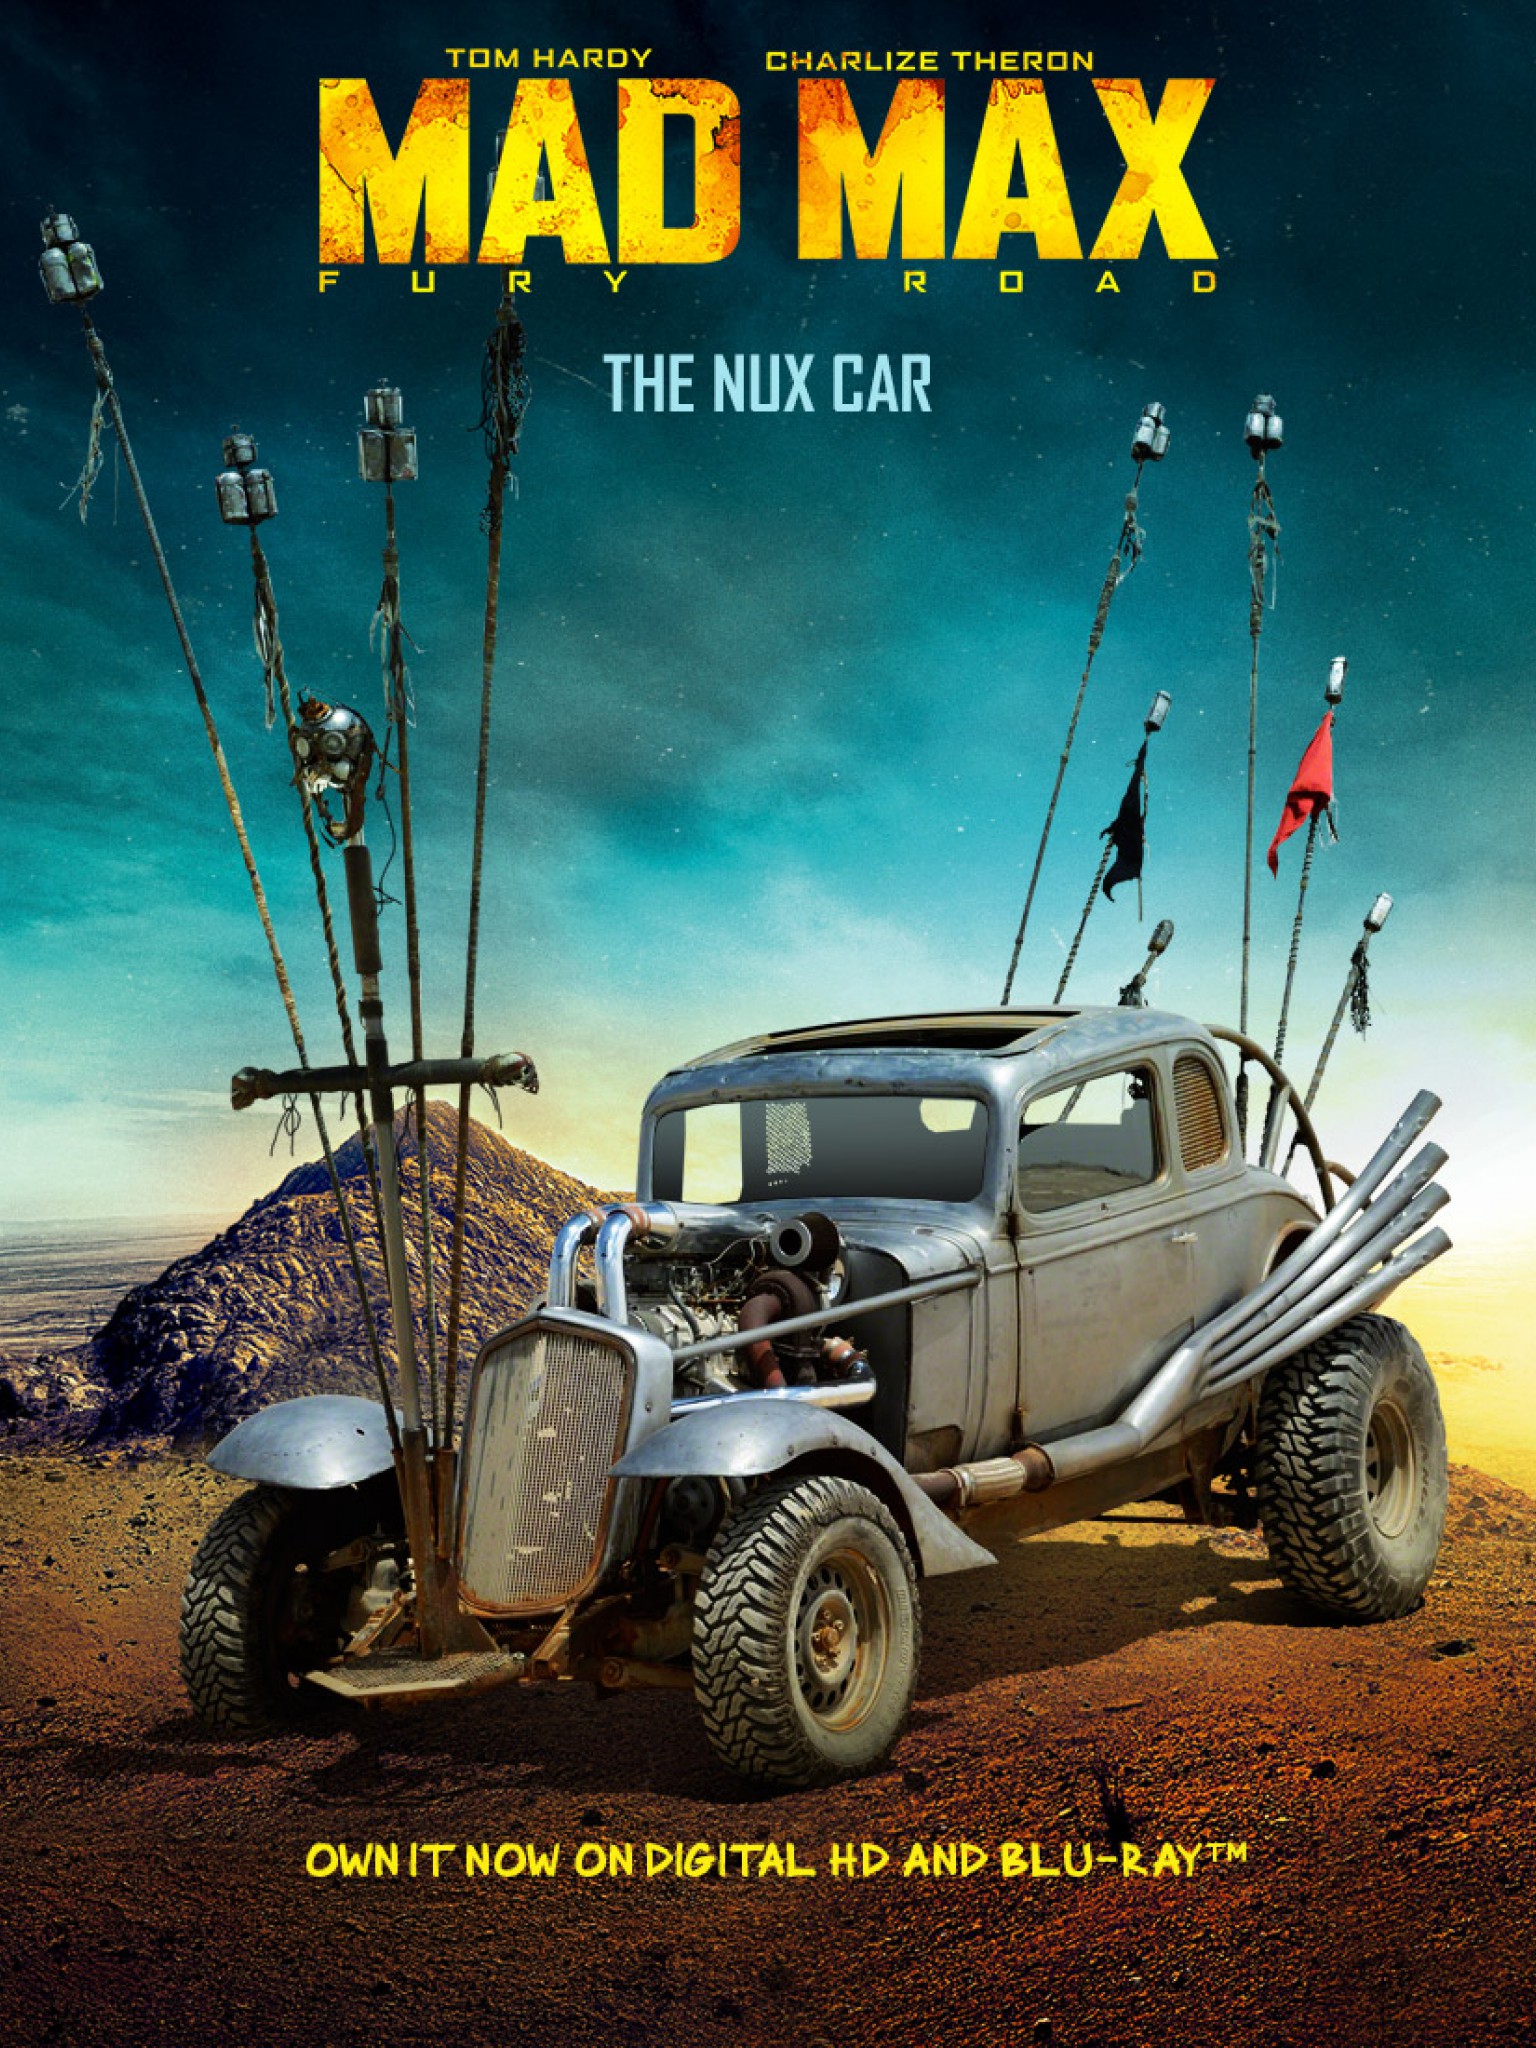 Mad Max Nux car